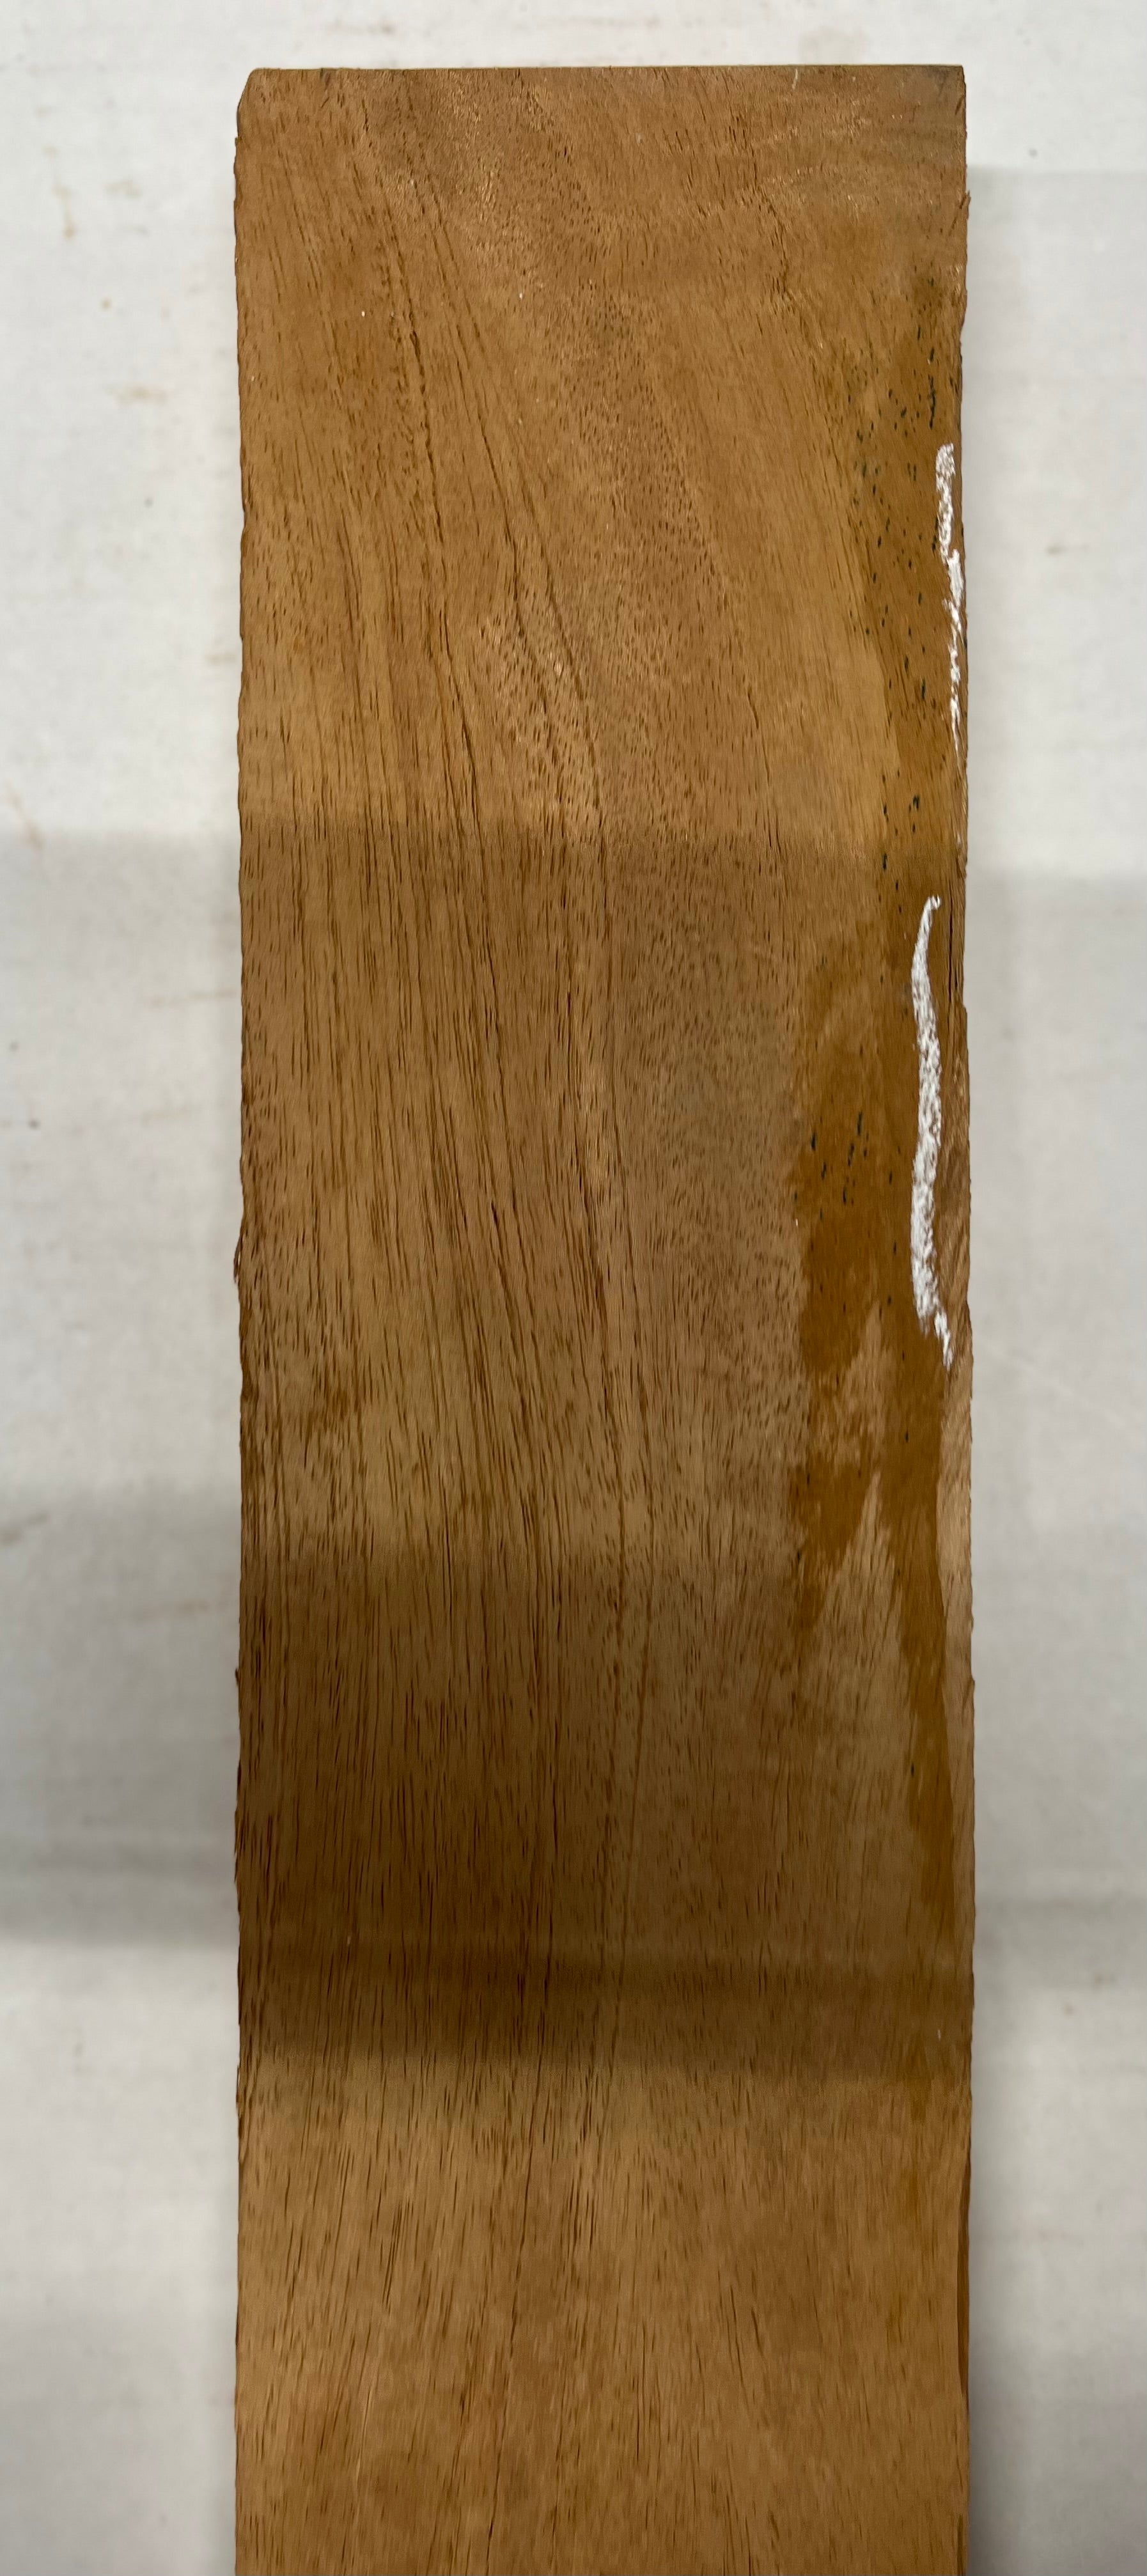 Spanish Cedar Thin Stock Three Dimensional Lumber Board 21&quot;x4&quot;x1-3/8&quot; 